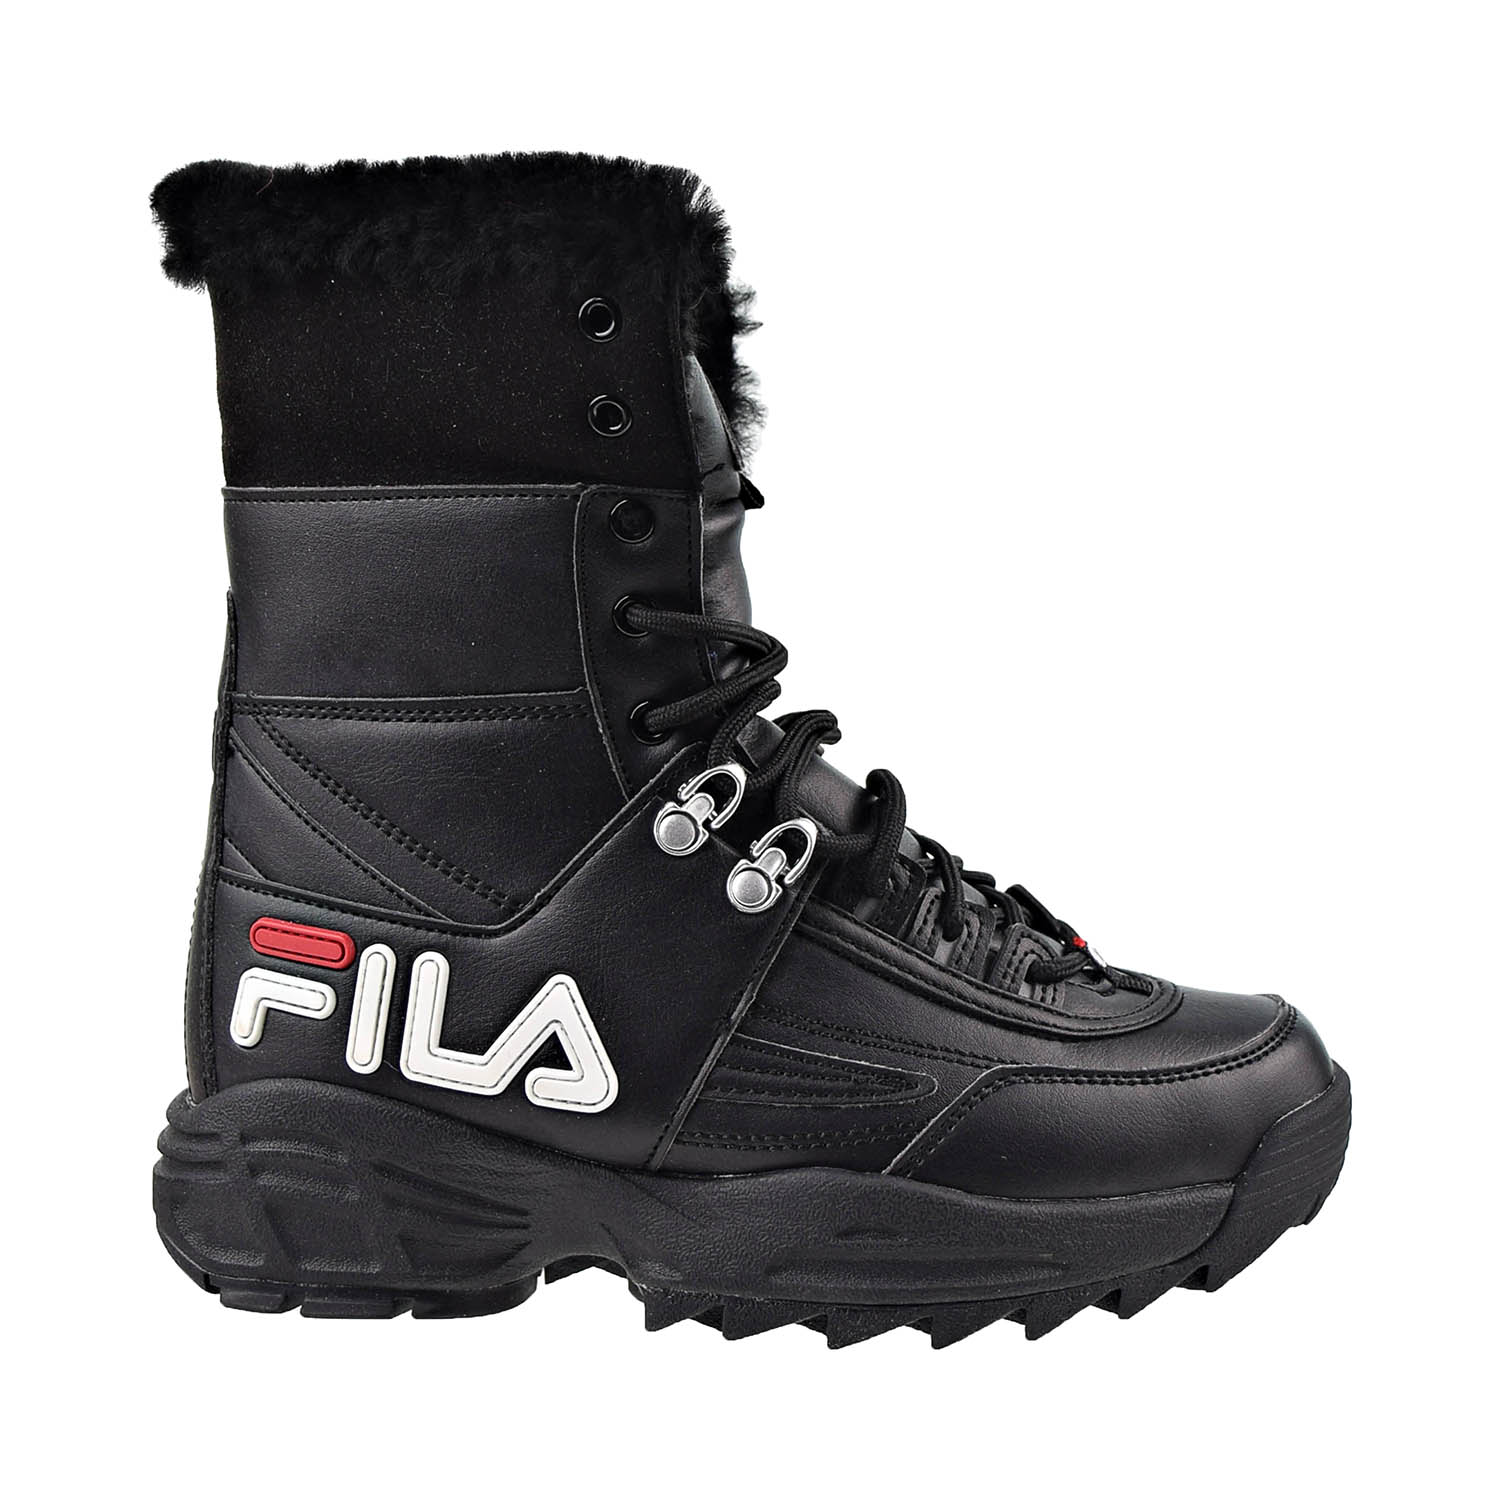 Fila Disruptor Shearling Top Women's Boots Black-White-Red 5hm00545-014